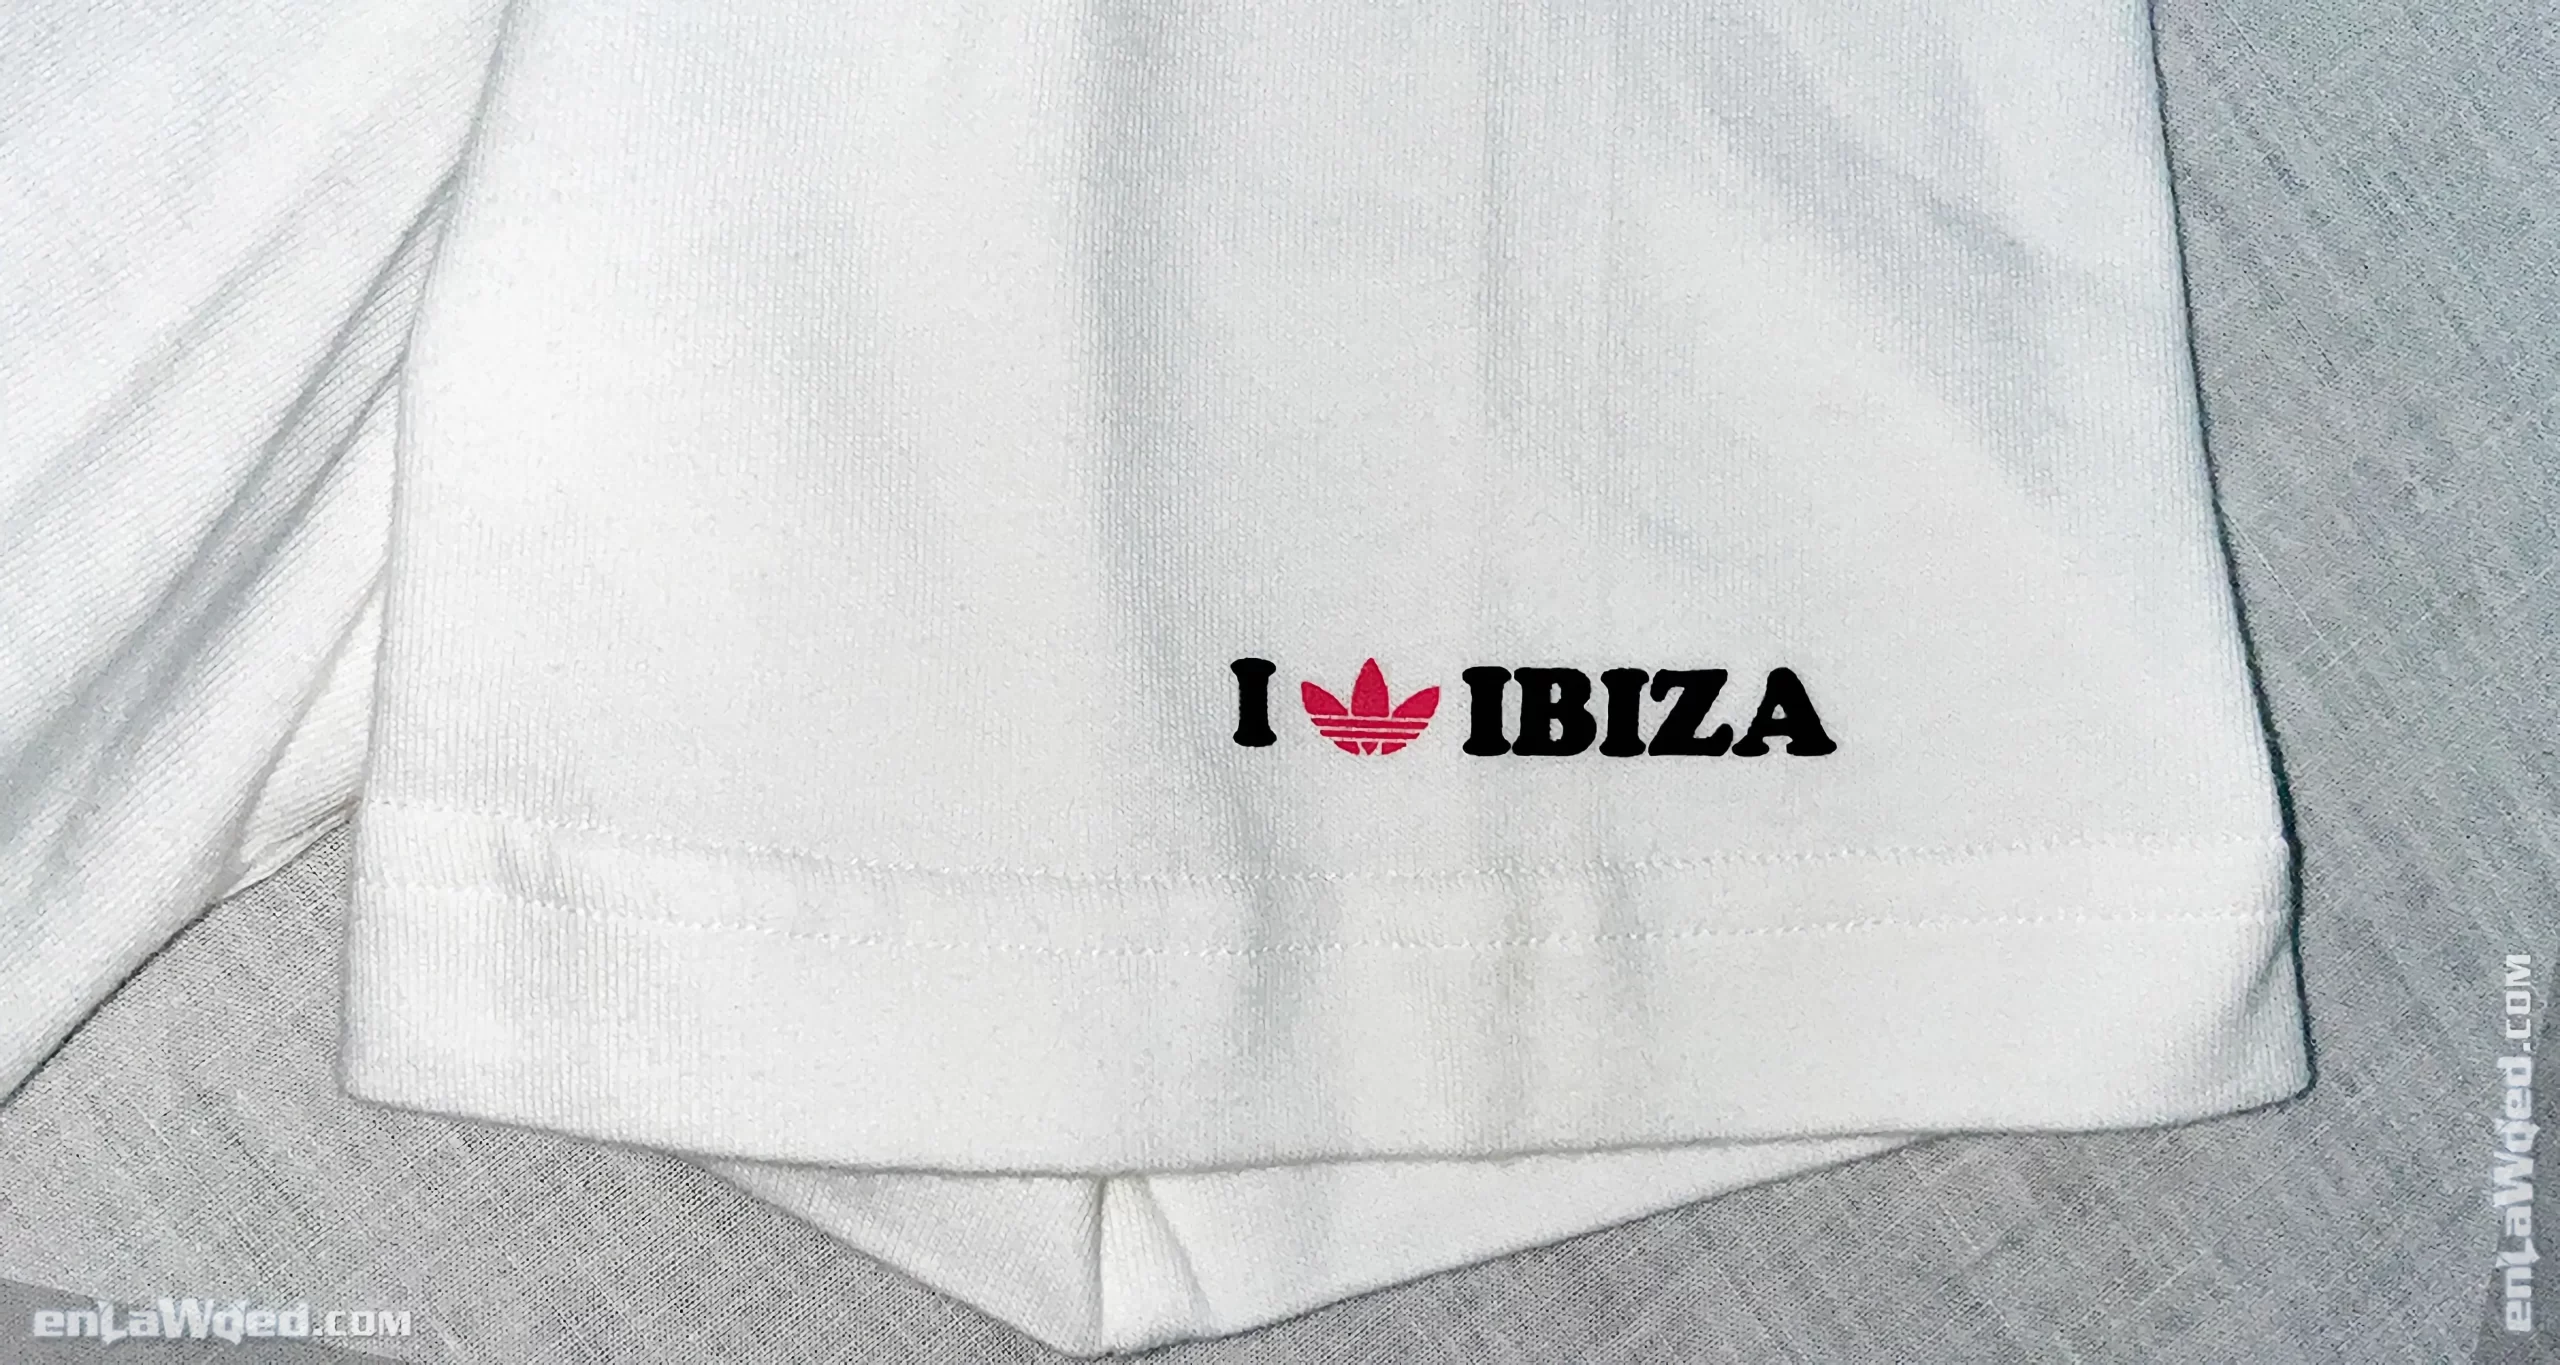 Men’s 2007 Ibiza T-Shirt by Adidas Originals: Ignite (EnLawded.com file #lmc5p6cz9owrface)